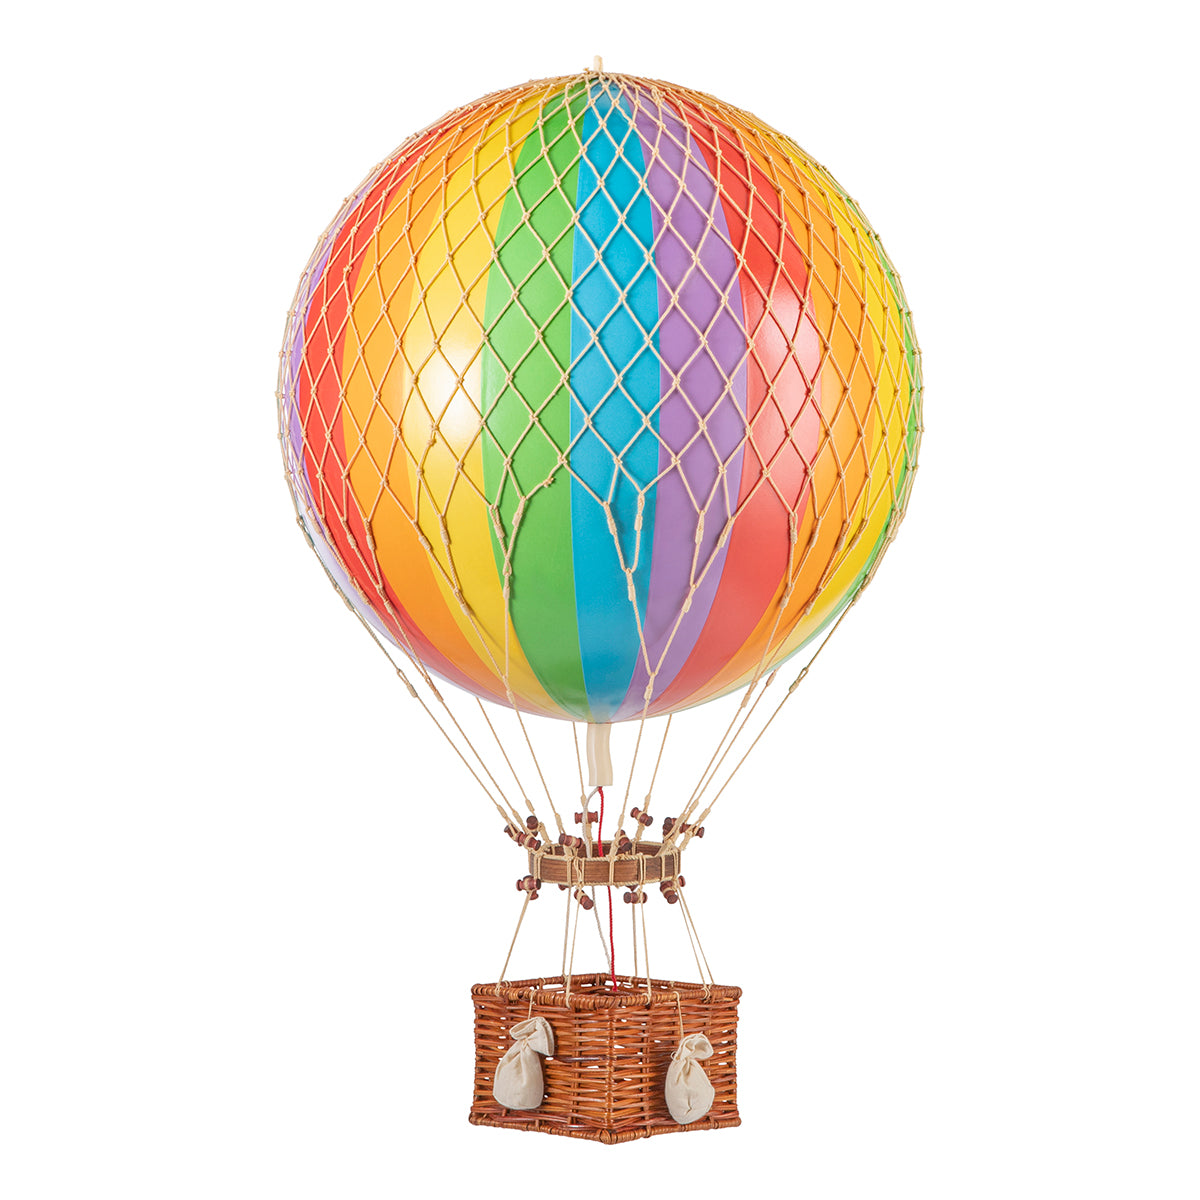 A Wonderen Stroopwafels decorative hot air balloon model inspired by Jules Verne's adventures.